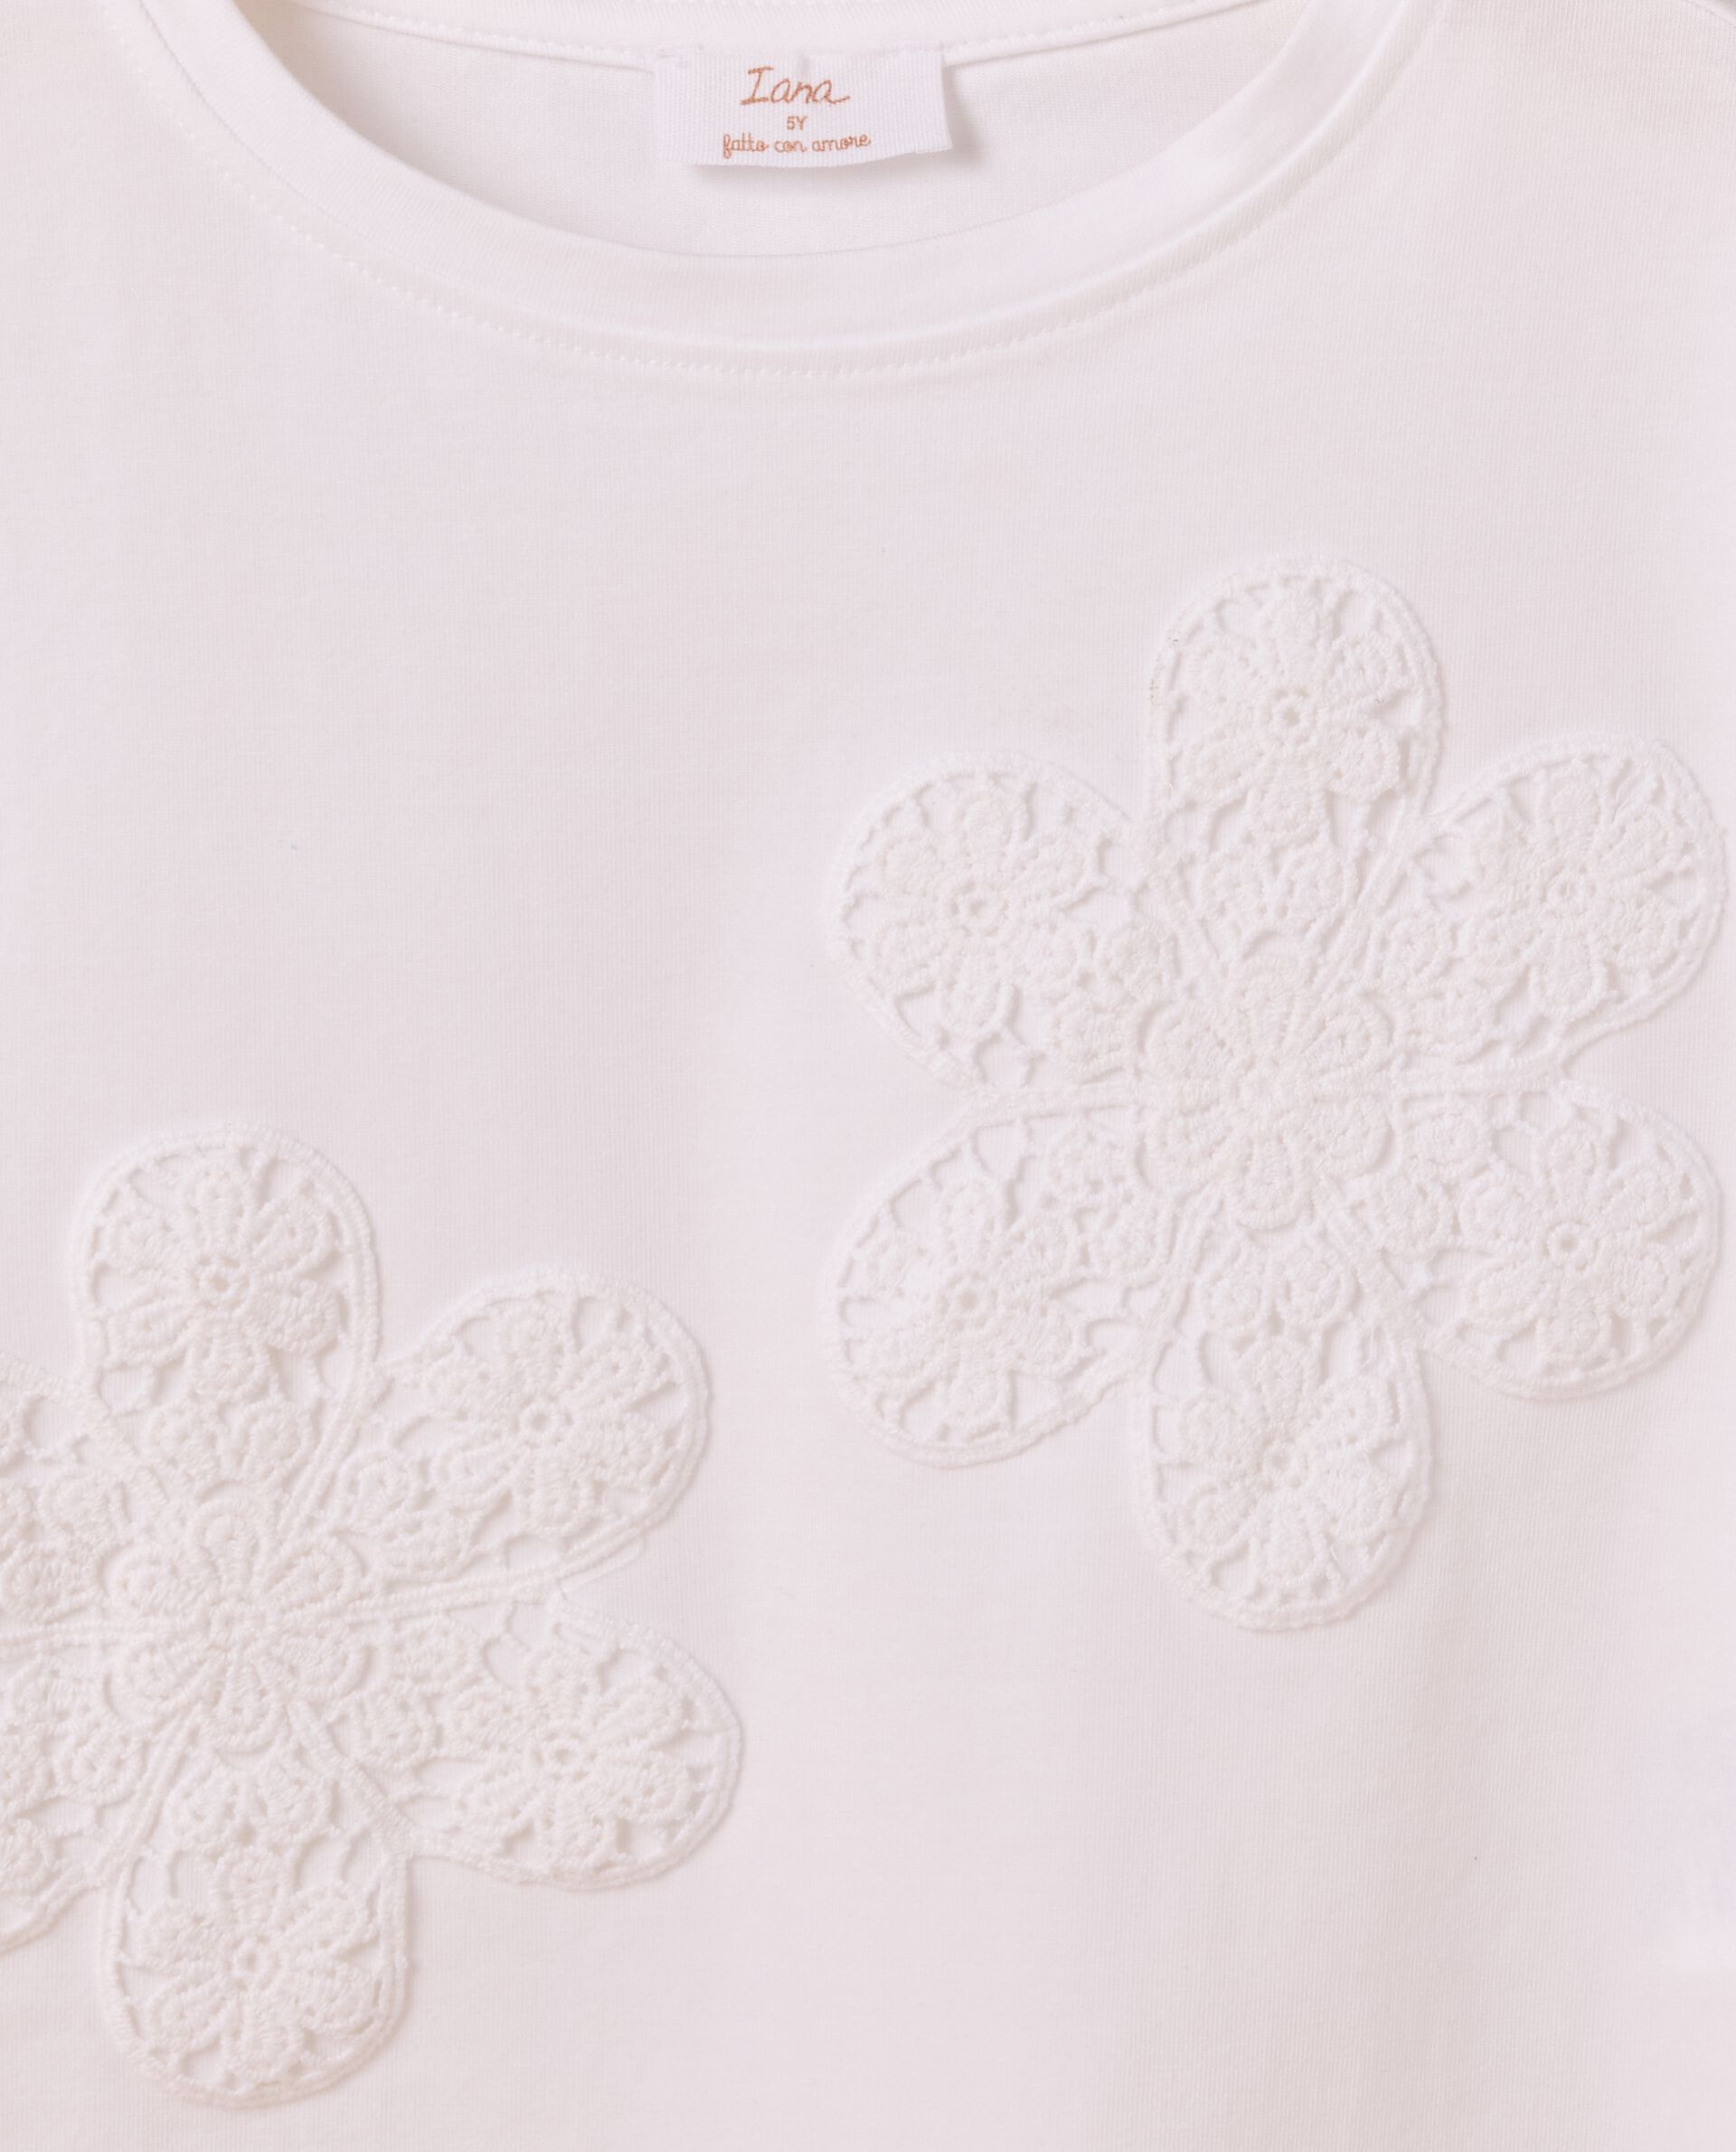 T-shirt IANA in cotone stretch con ricami bambina